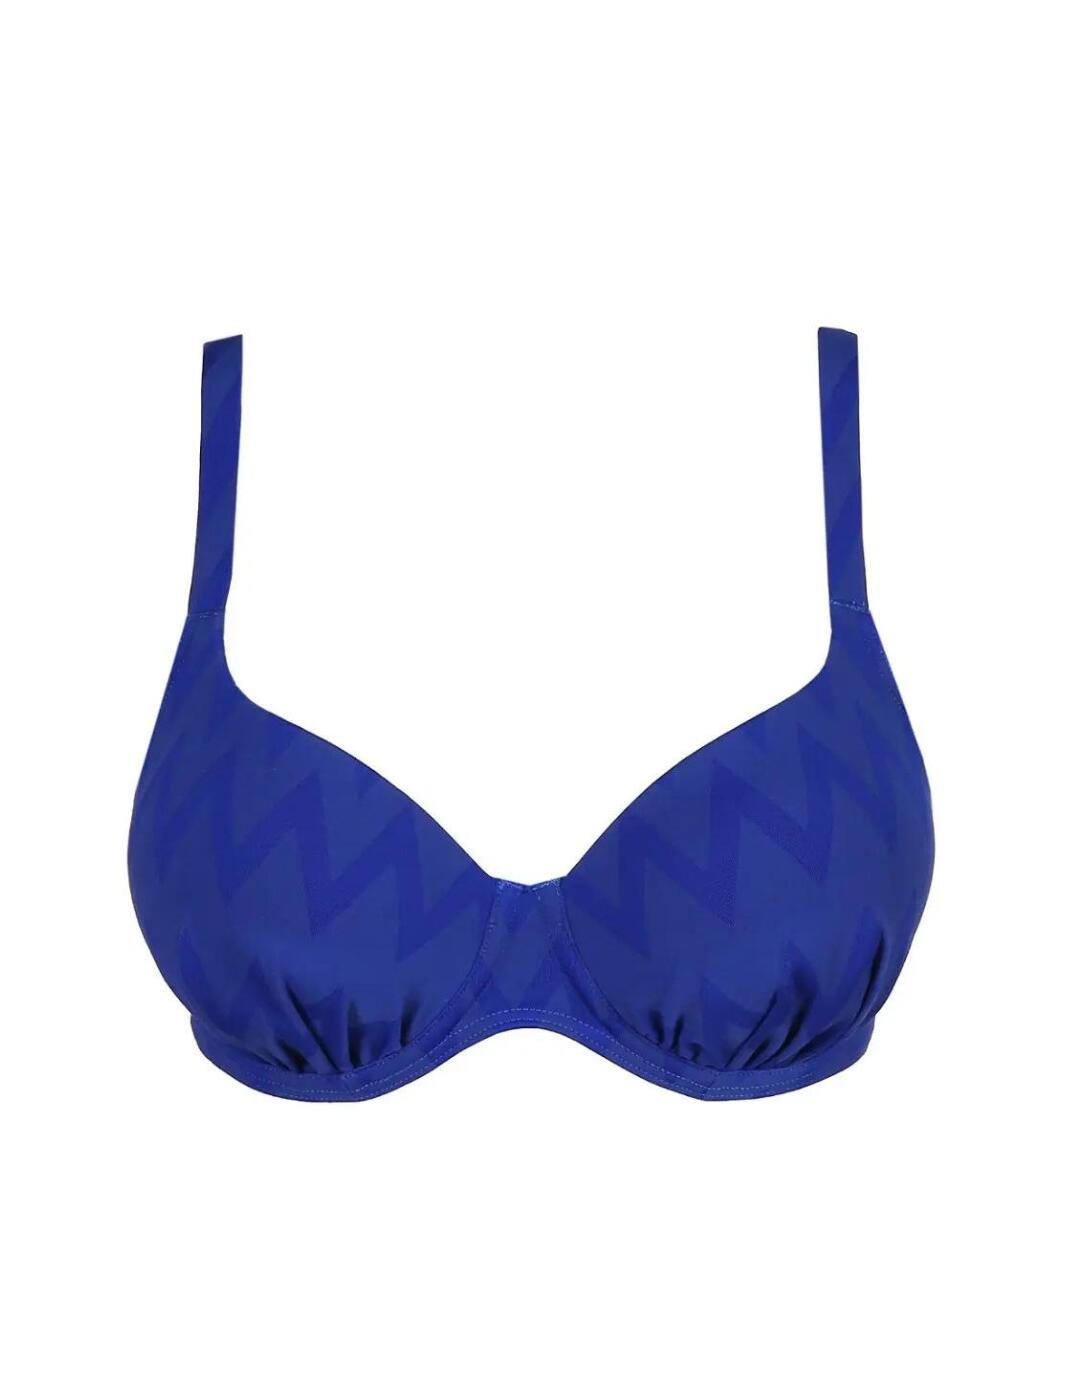 PrimaDonna Swim VENICE blue pool bikini top full cup padded